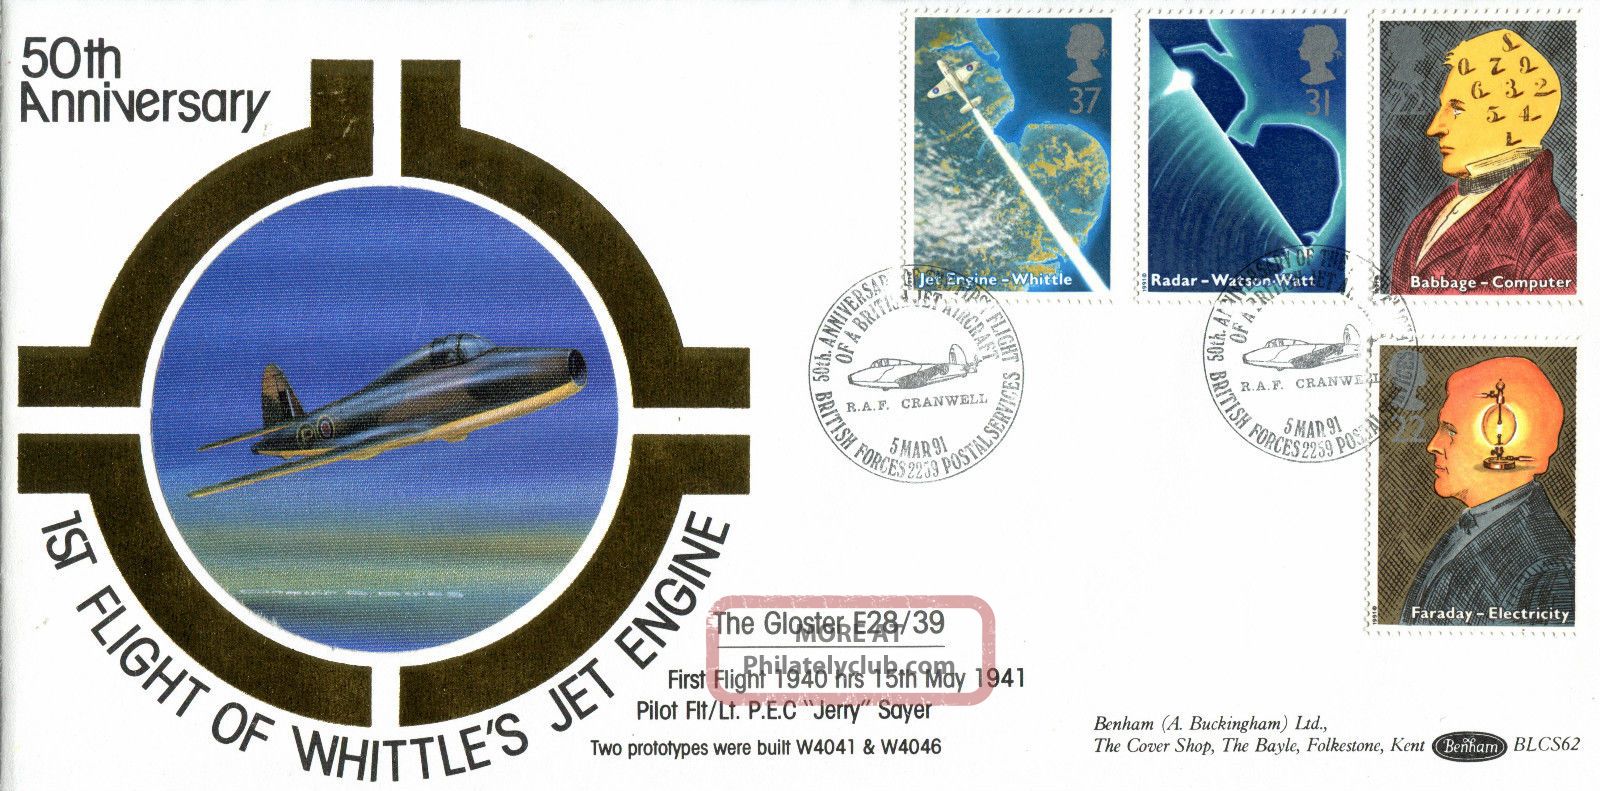 5 March 1991 Scientific Achievement Benham Blcs 62 Fdc Raf Cranwell Shs Topical Stamps photo